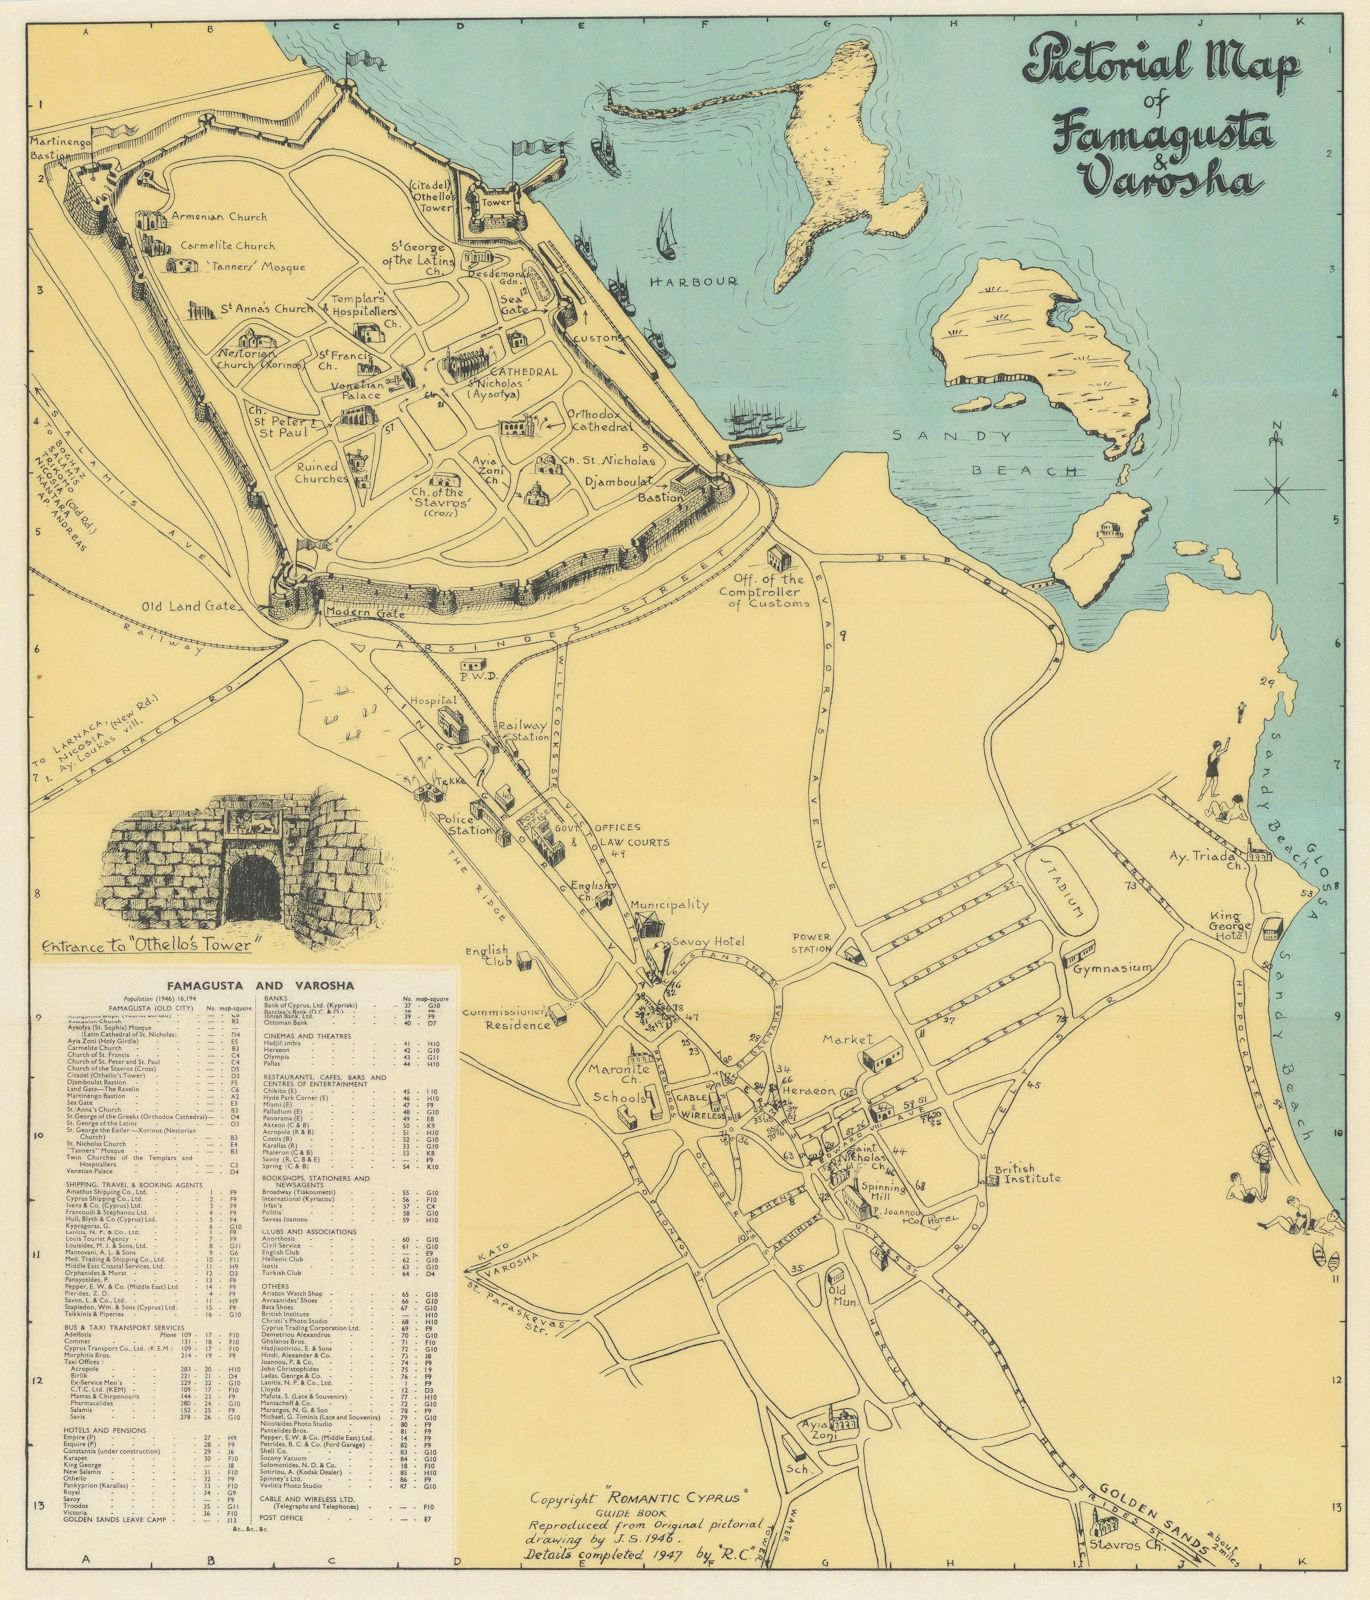 Associate Product Famagusta & Varosha pictorial map vintage city plan Gazimagusa Cyprus SABRY 1951